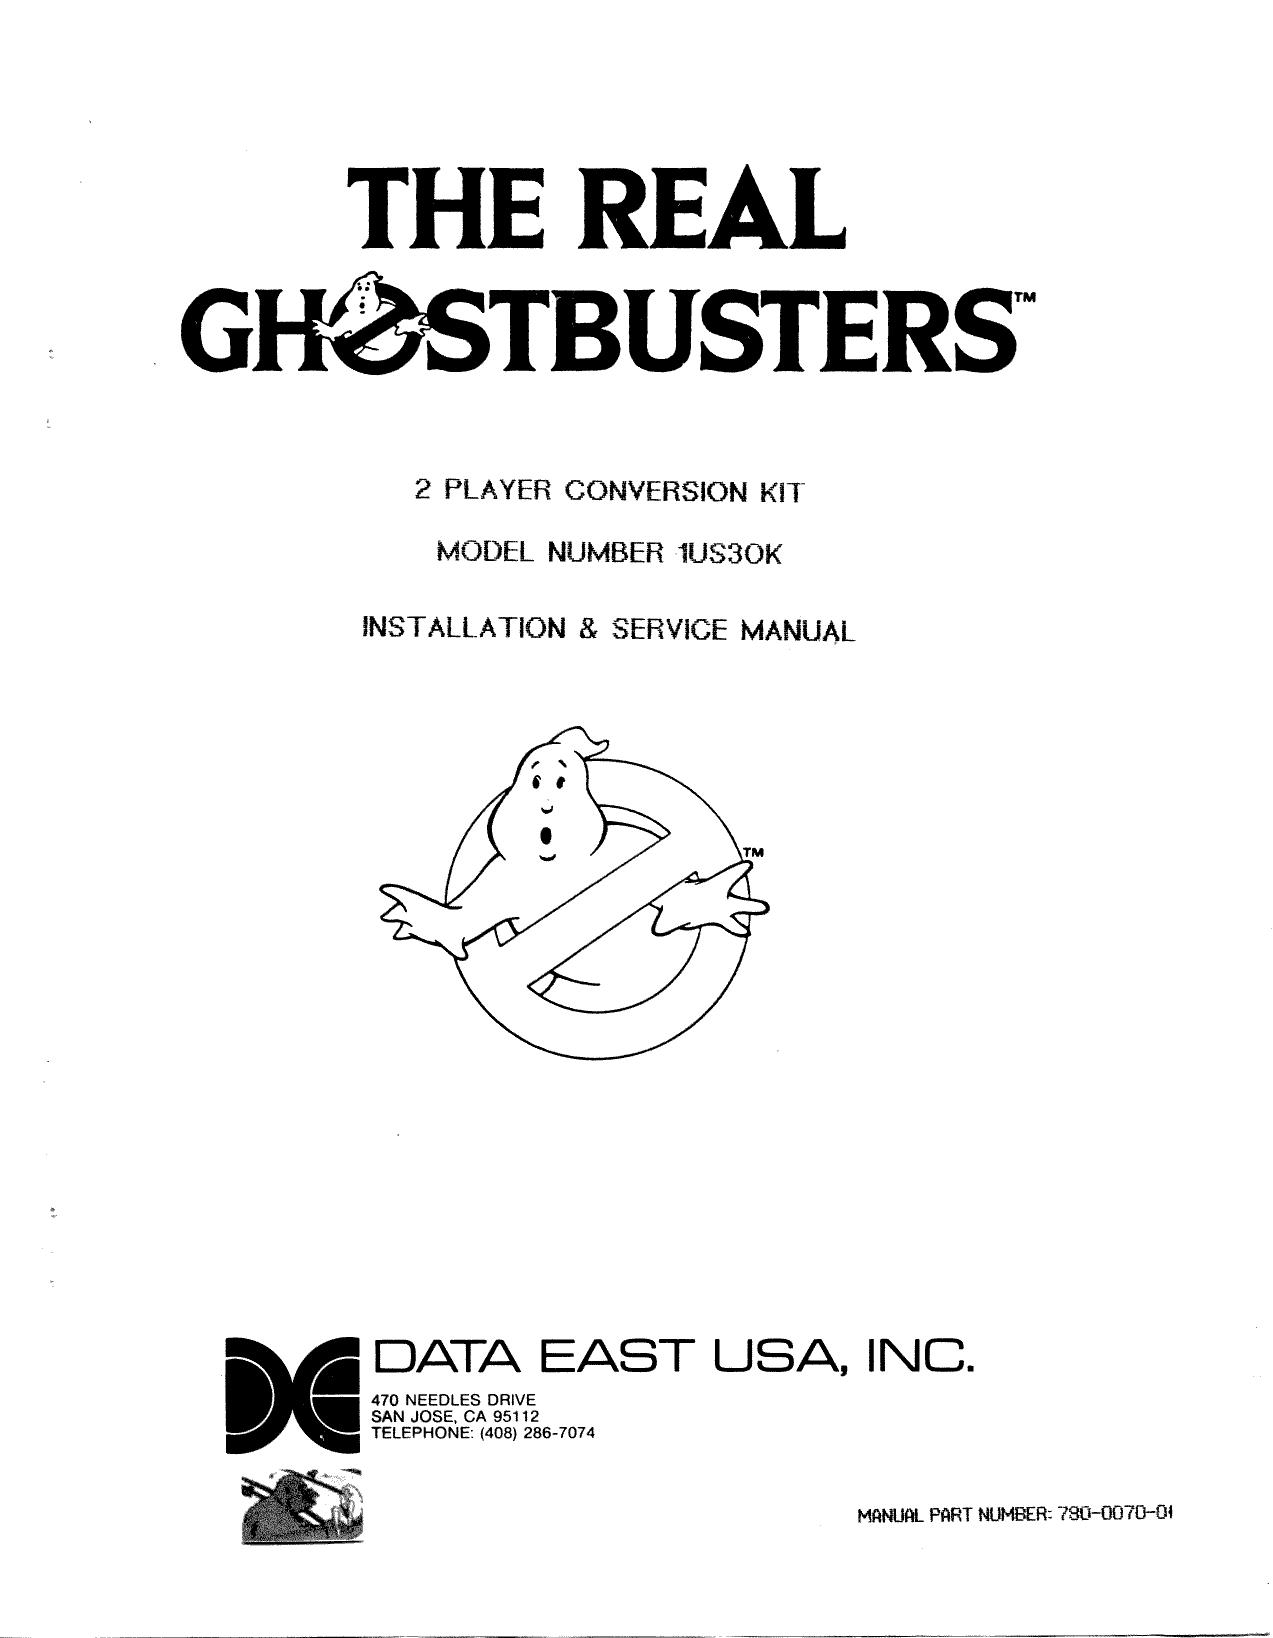 Ghostbusters.man